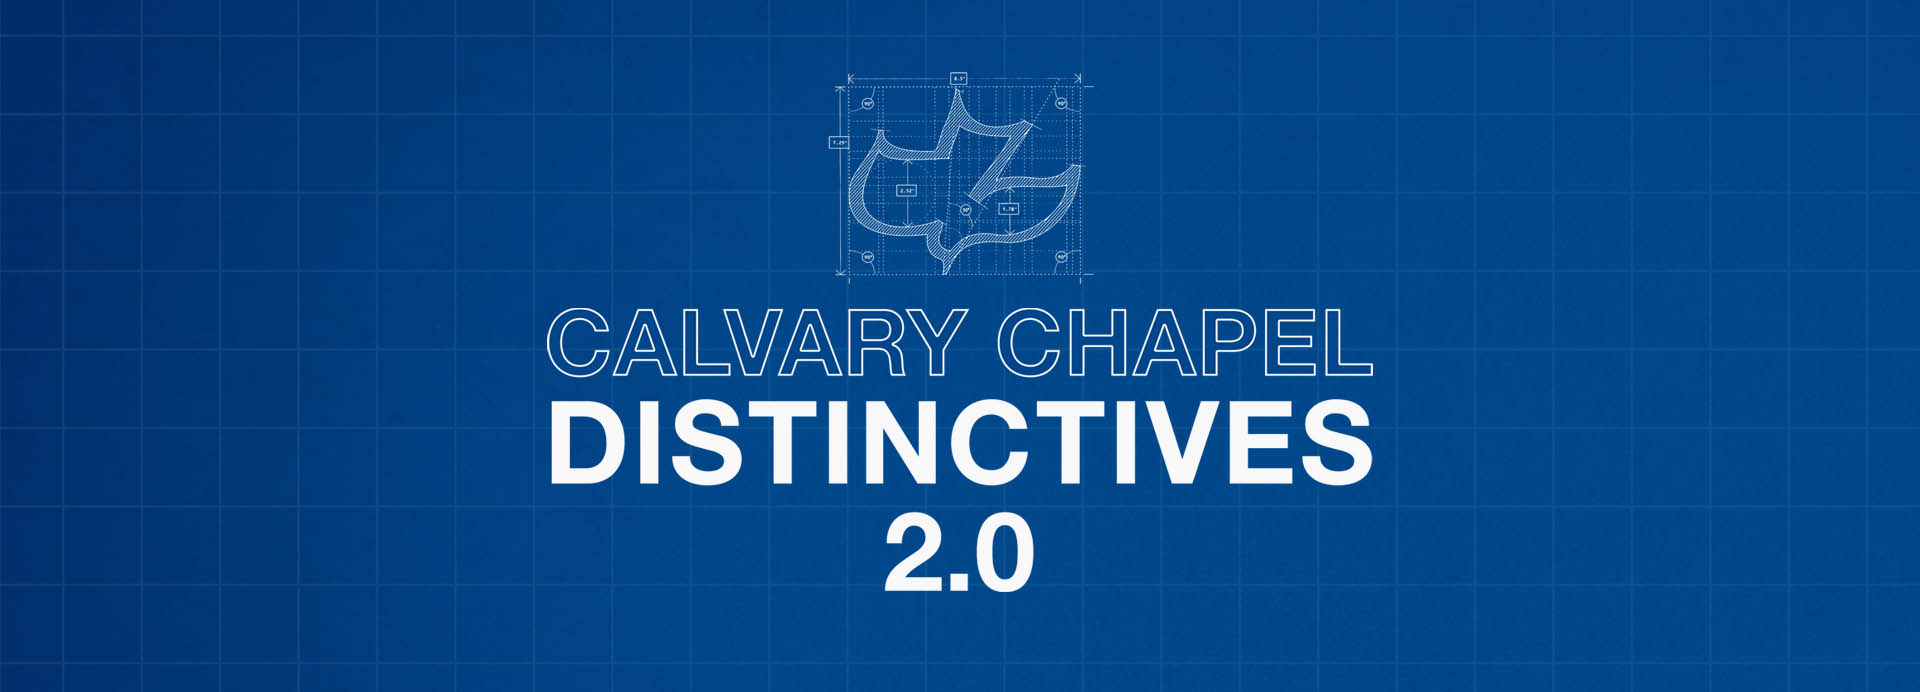 Calvary Chapel Distinctives 2.0